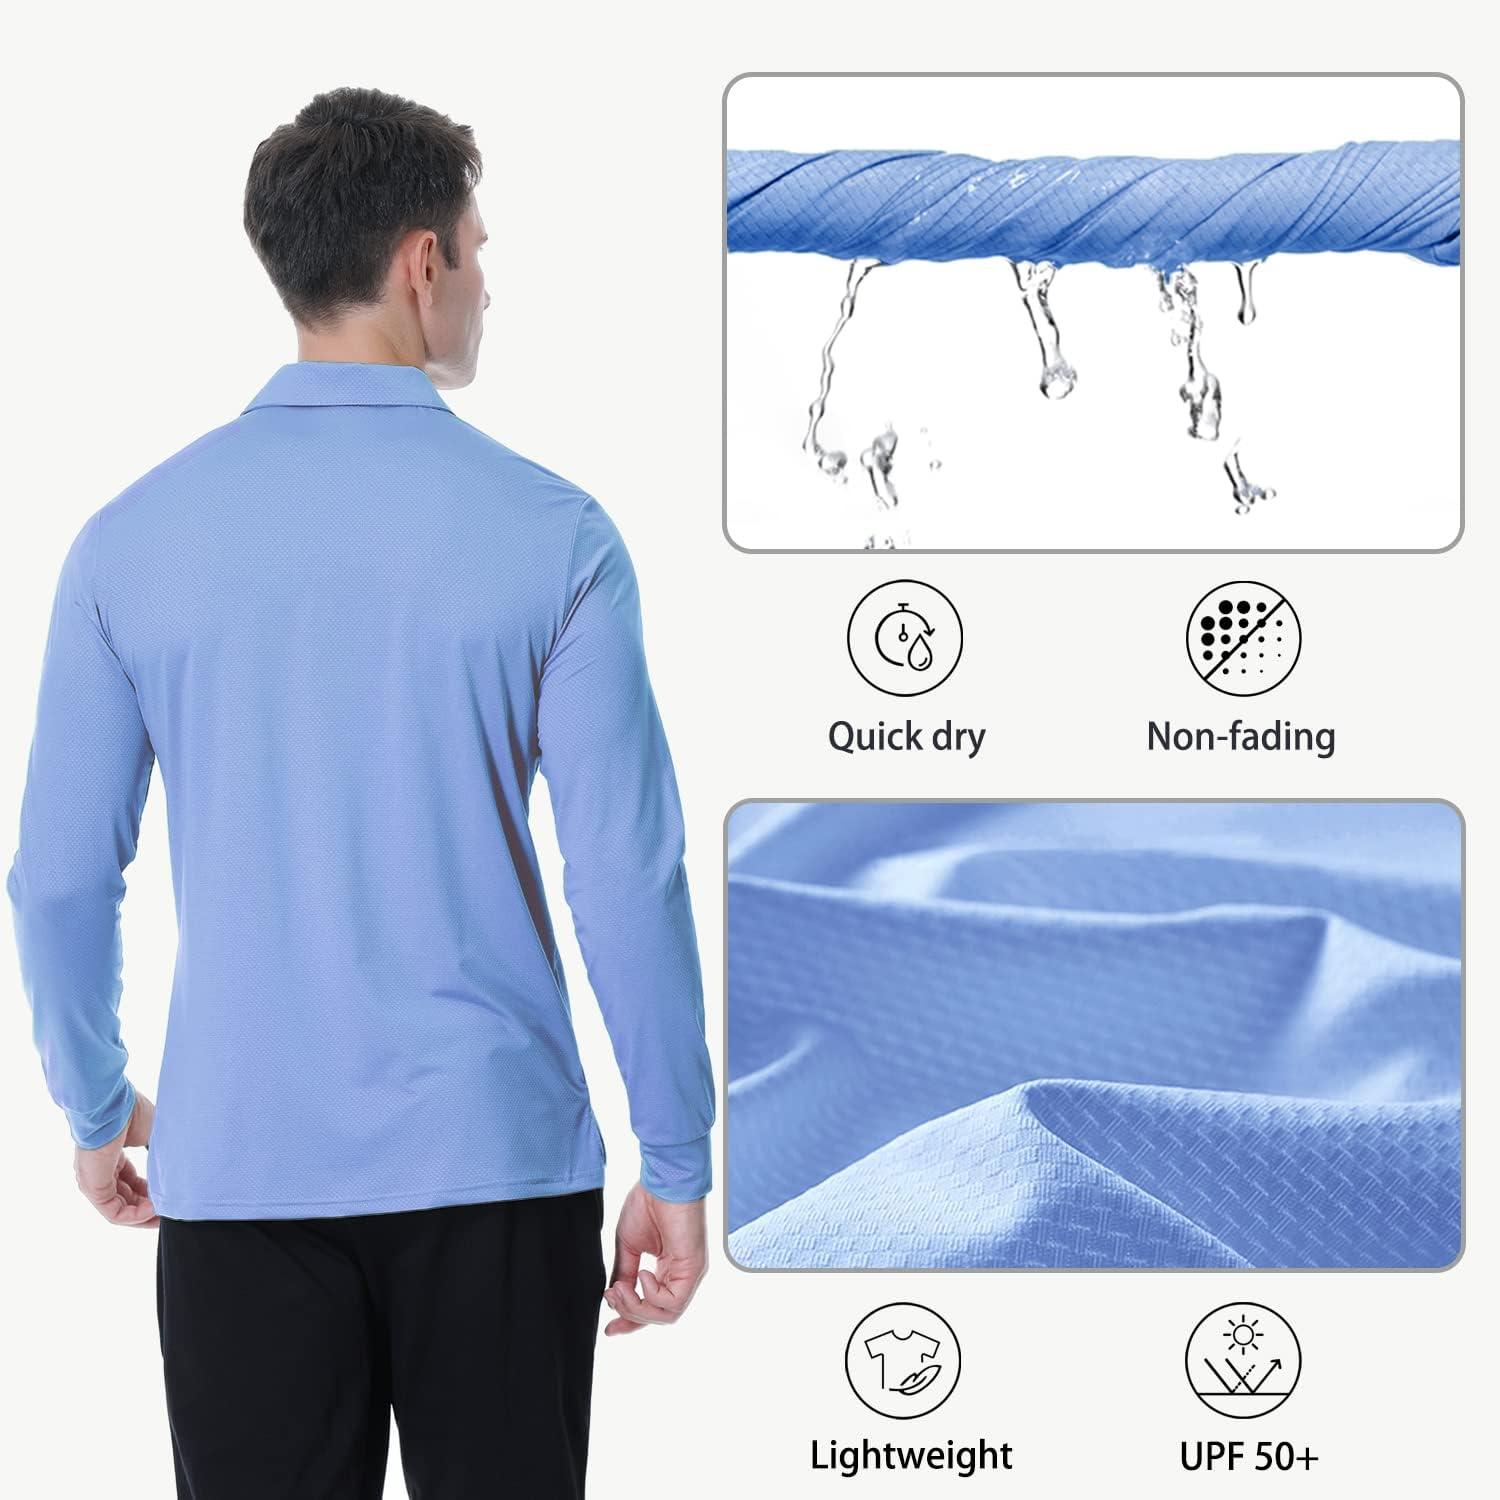 JIM LEAGUE Men's Golf Shirts Polo Quick Dry Lightweight Performance Short &  Long Sleeve Athletic Tennis